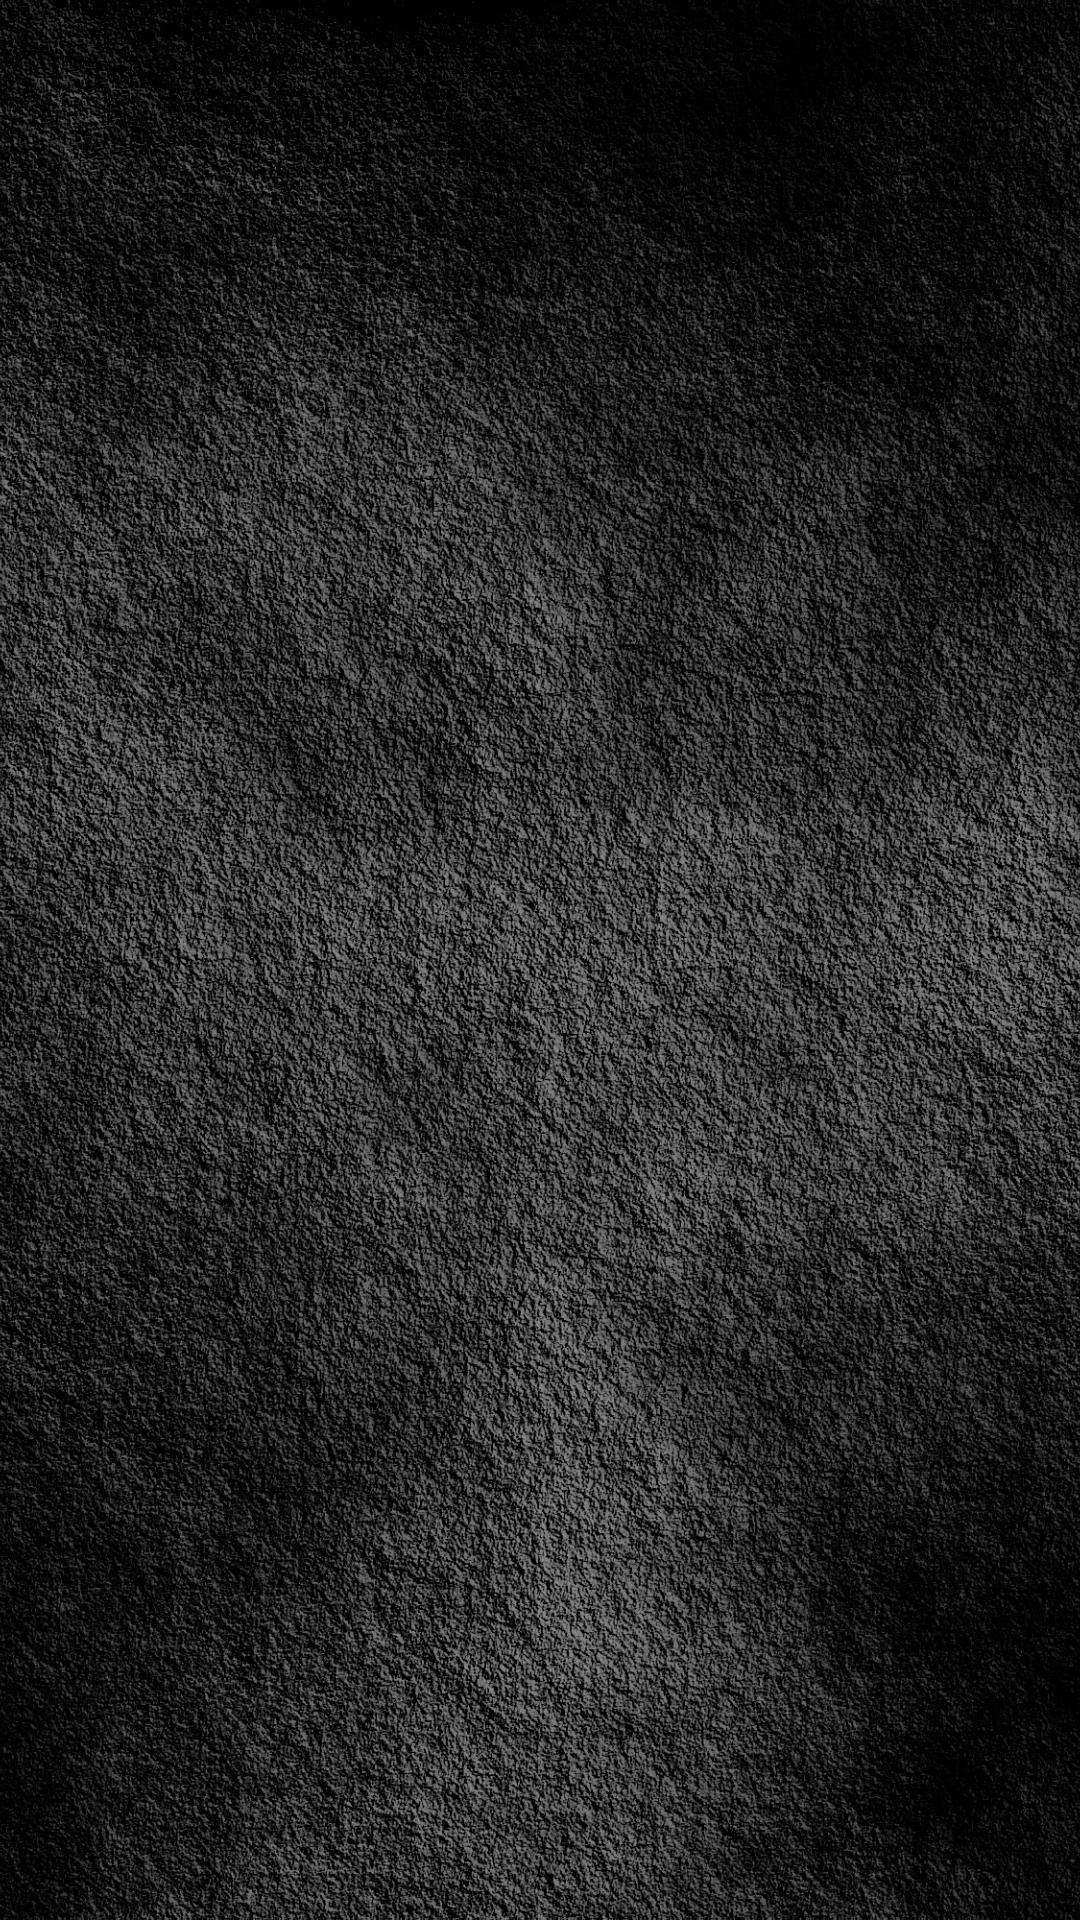 black rock texture mobile background. Rock textures, Black aesthetic wallpaper, Rock background